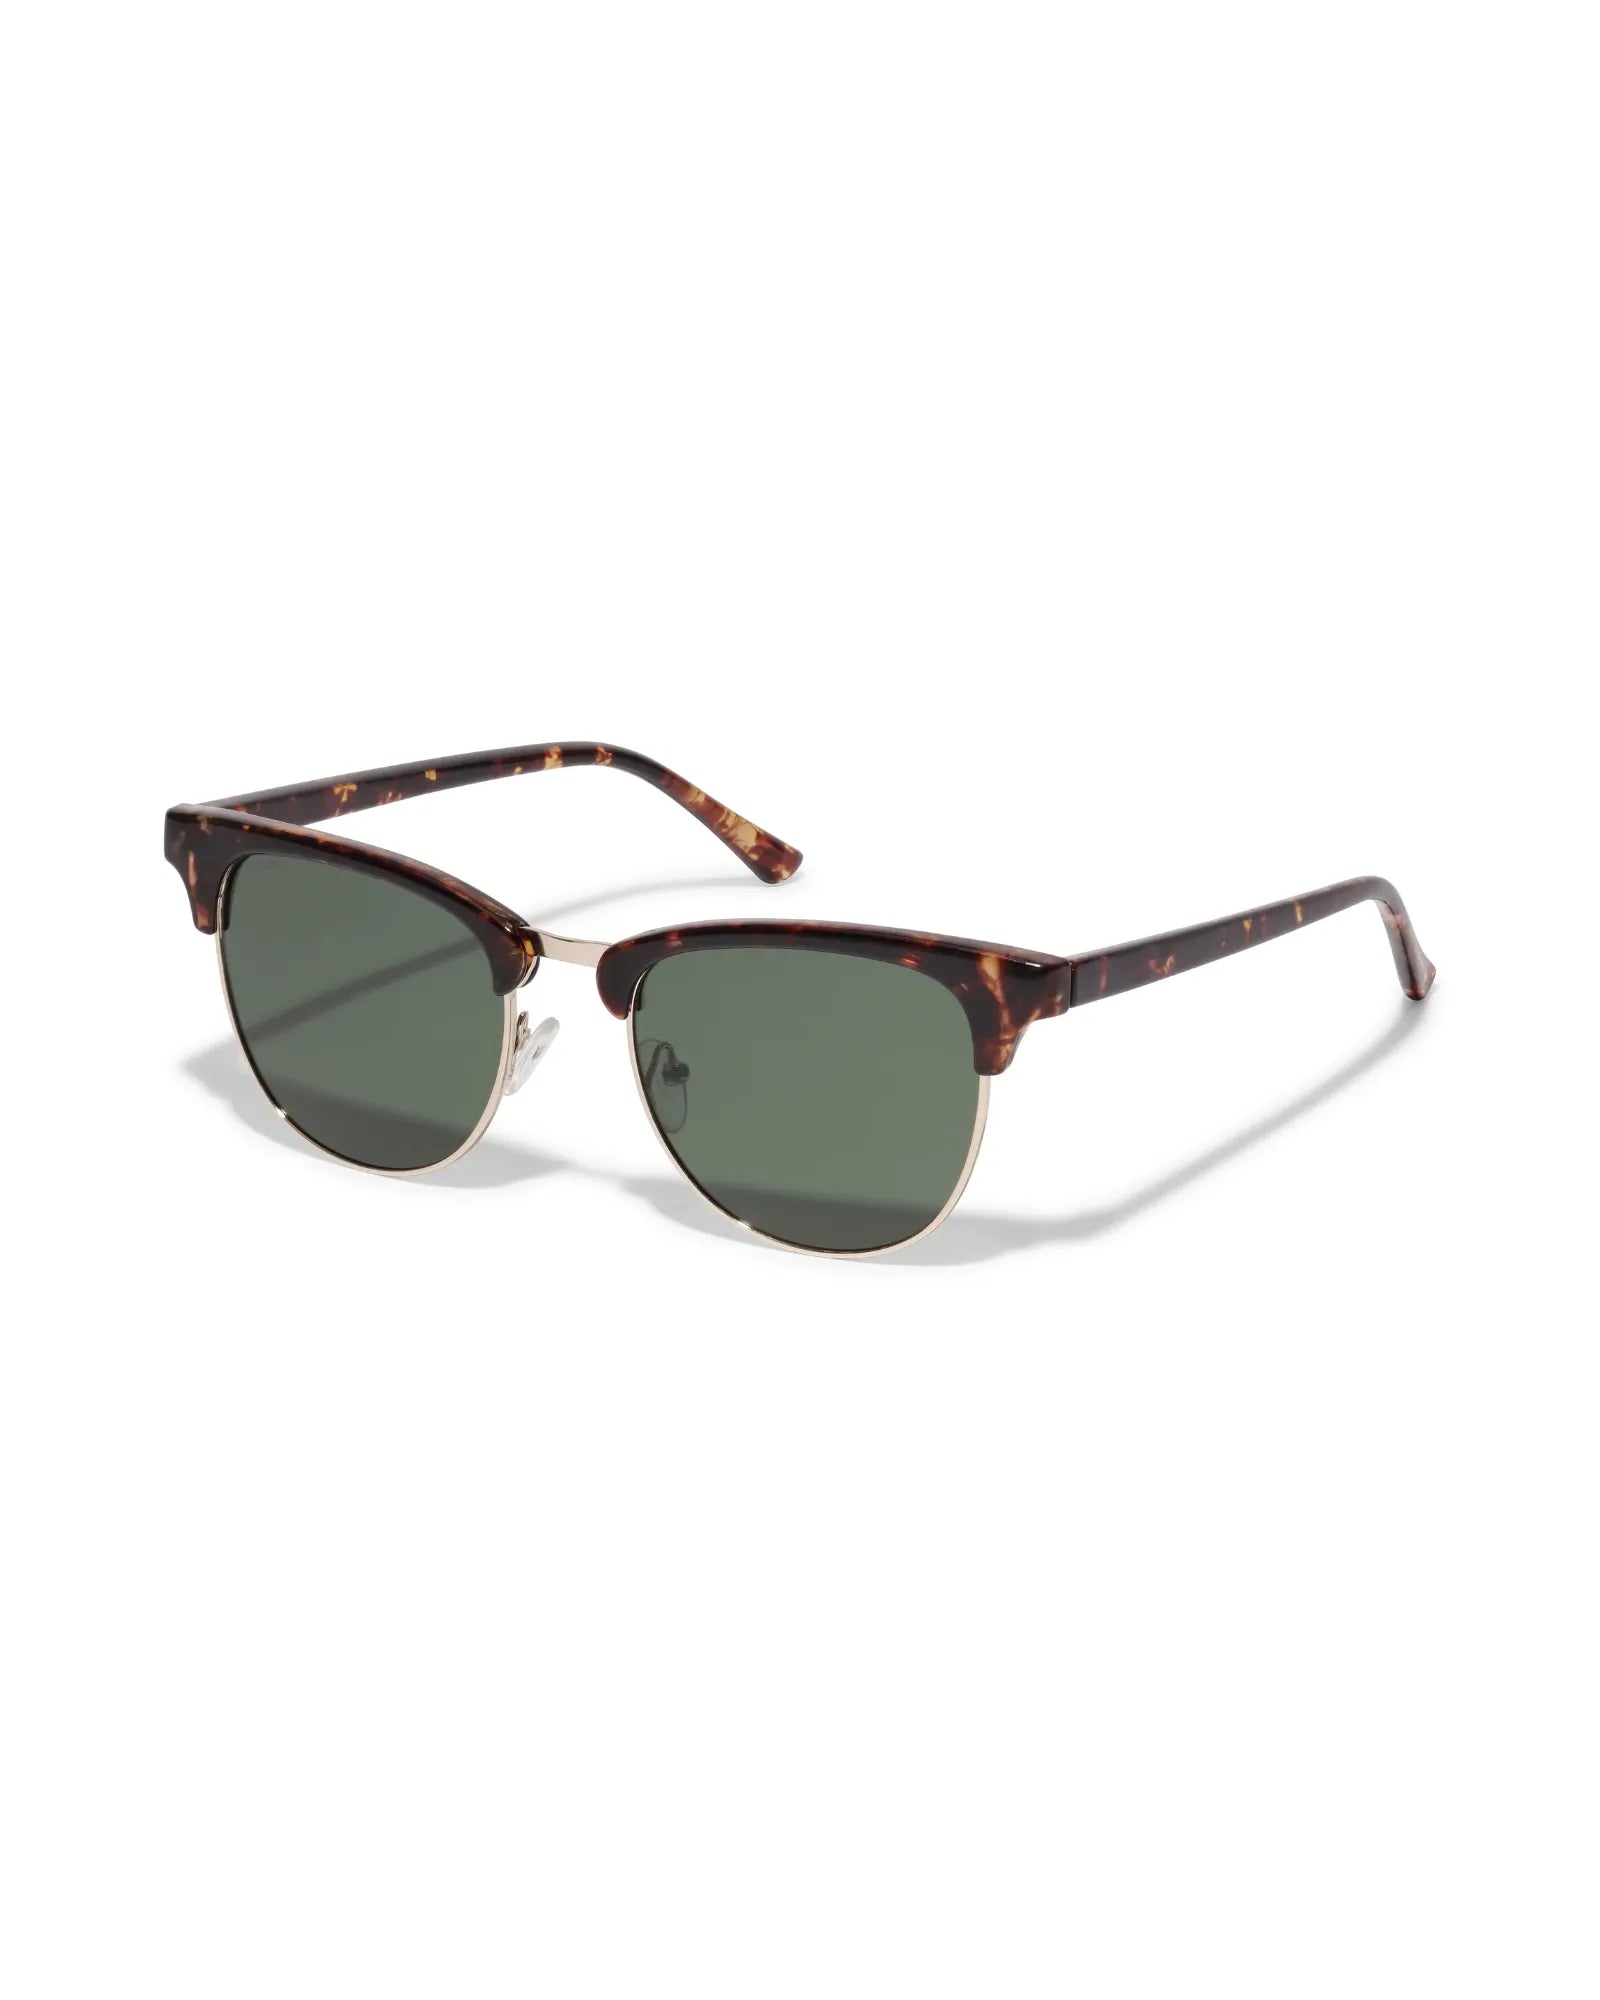 CHARLIE Retro Style Sunglasses - Brown Tortoise/Gold